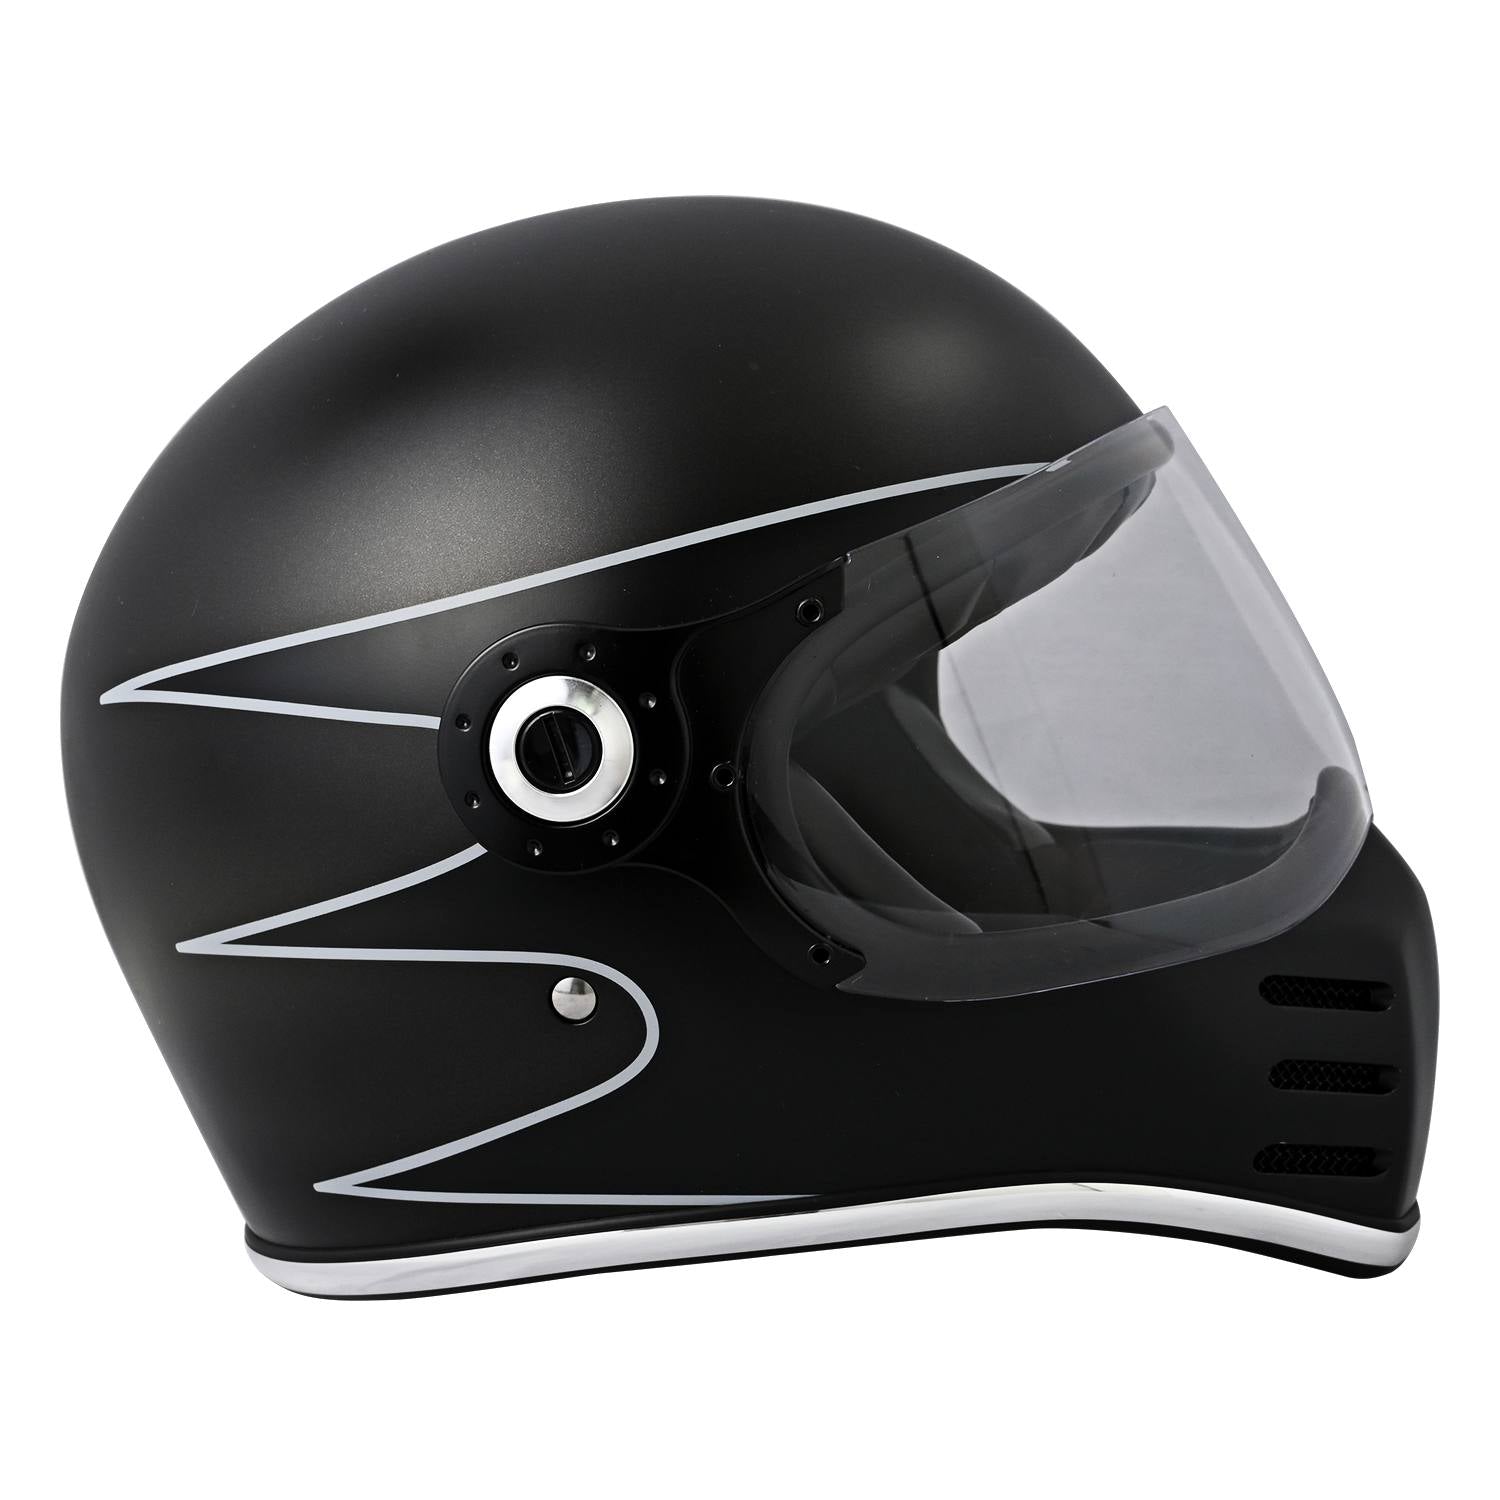 RIDEZ X HELMET 限量型号 SCALLOP 全脸摩托车头盔